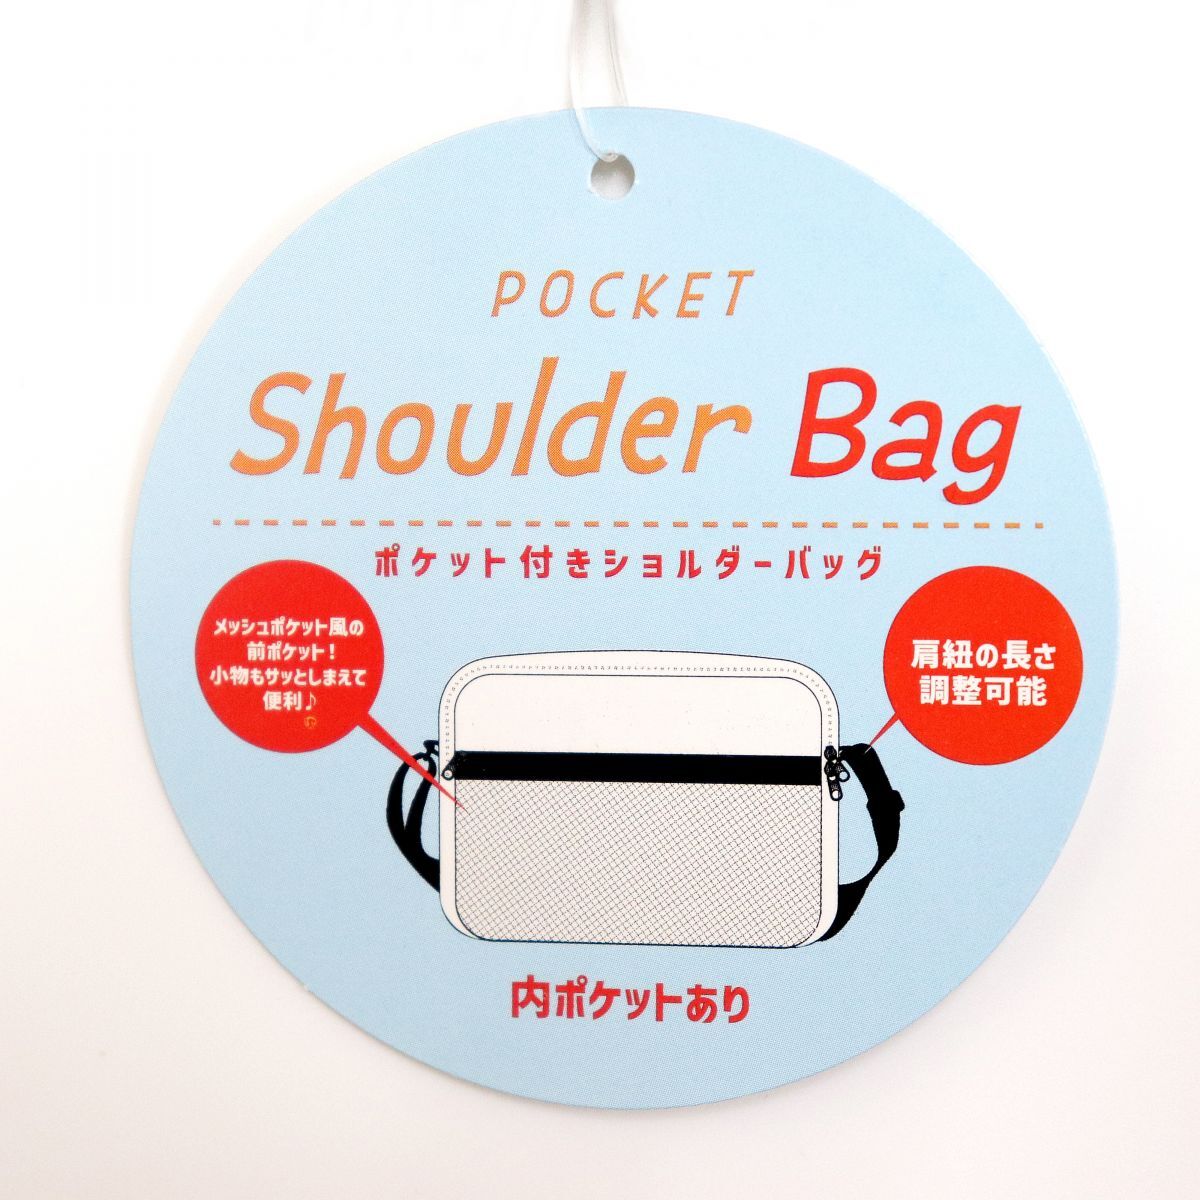 * Moomin MOOMIN little mi chair naf gold new goods convenience casual with pocket shoulder bag BAG bag [MOOMIN-MESHO] one six *QWER*